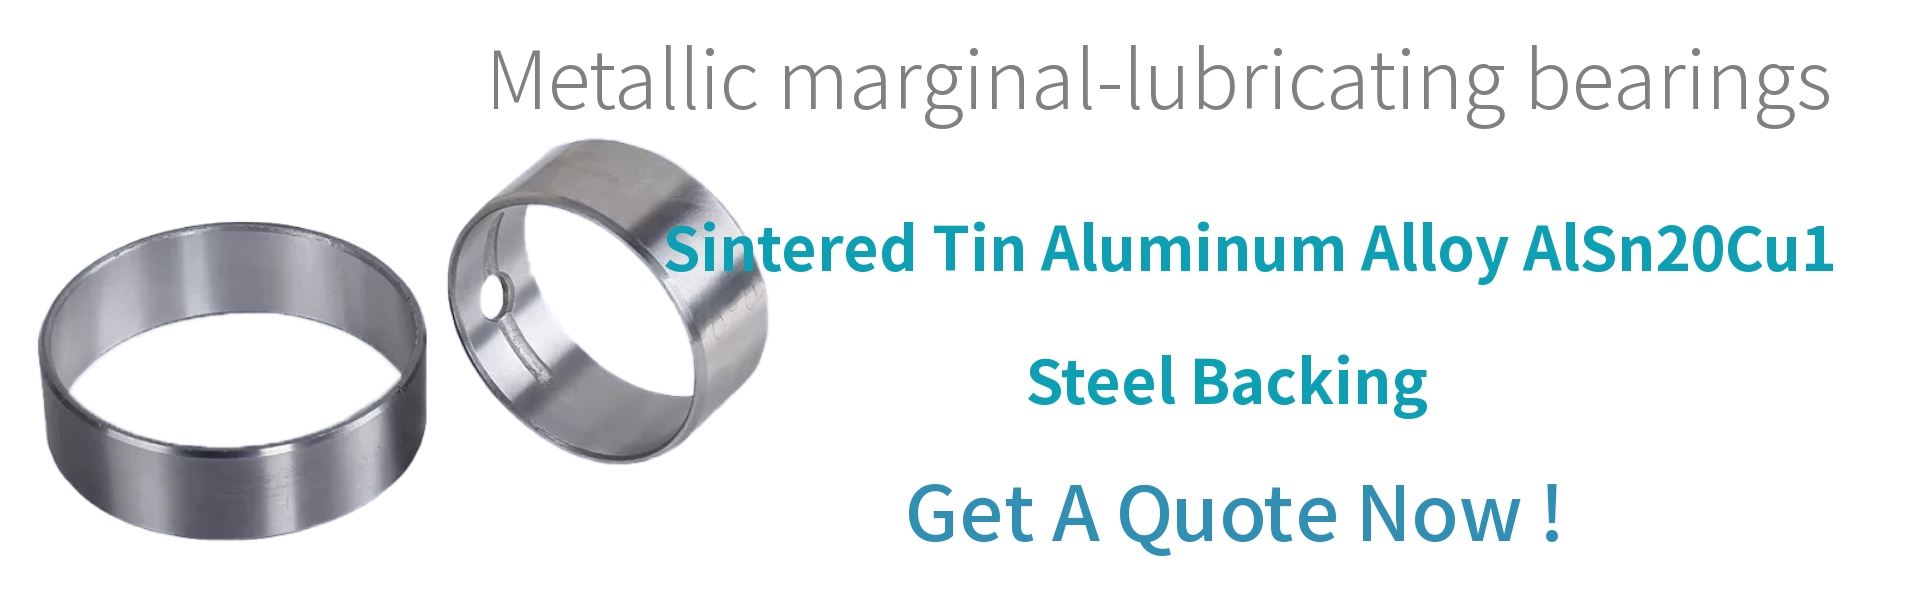 Sintered Tin Aluminum Alloy AlSn20Cu1